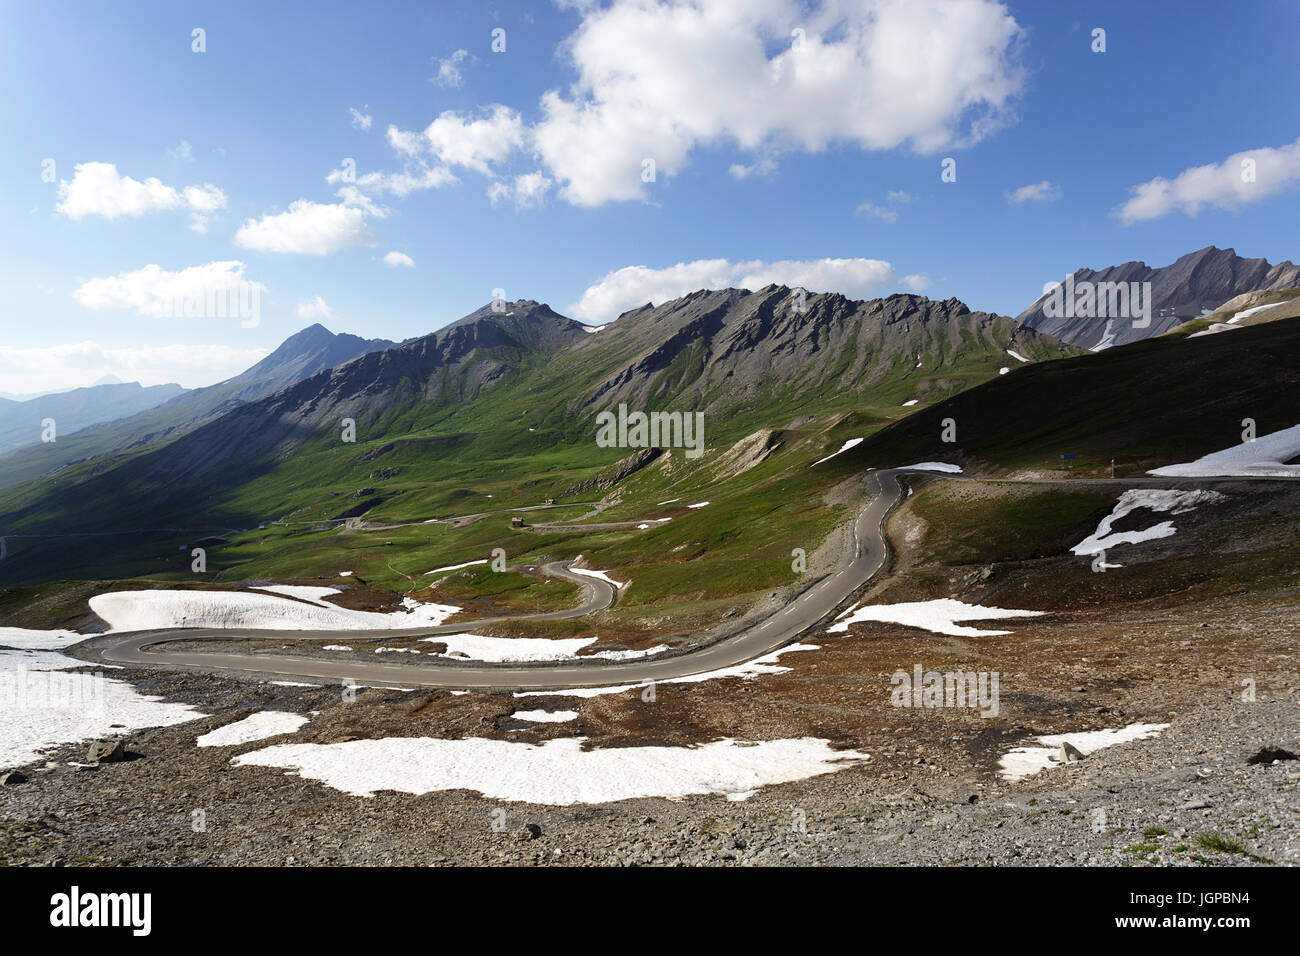 Scenic alpine mountain road in Alpes, France. Stock Photo